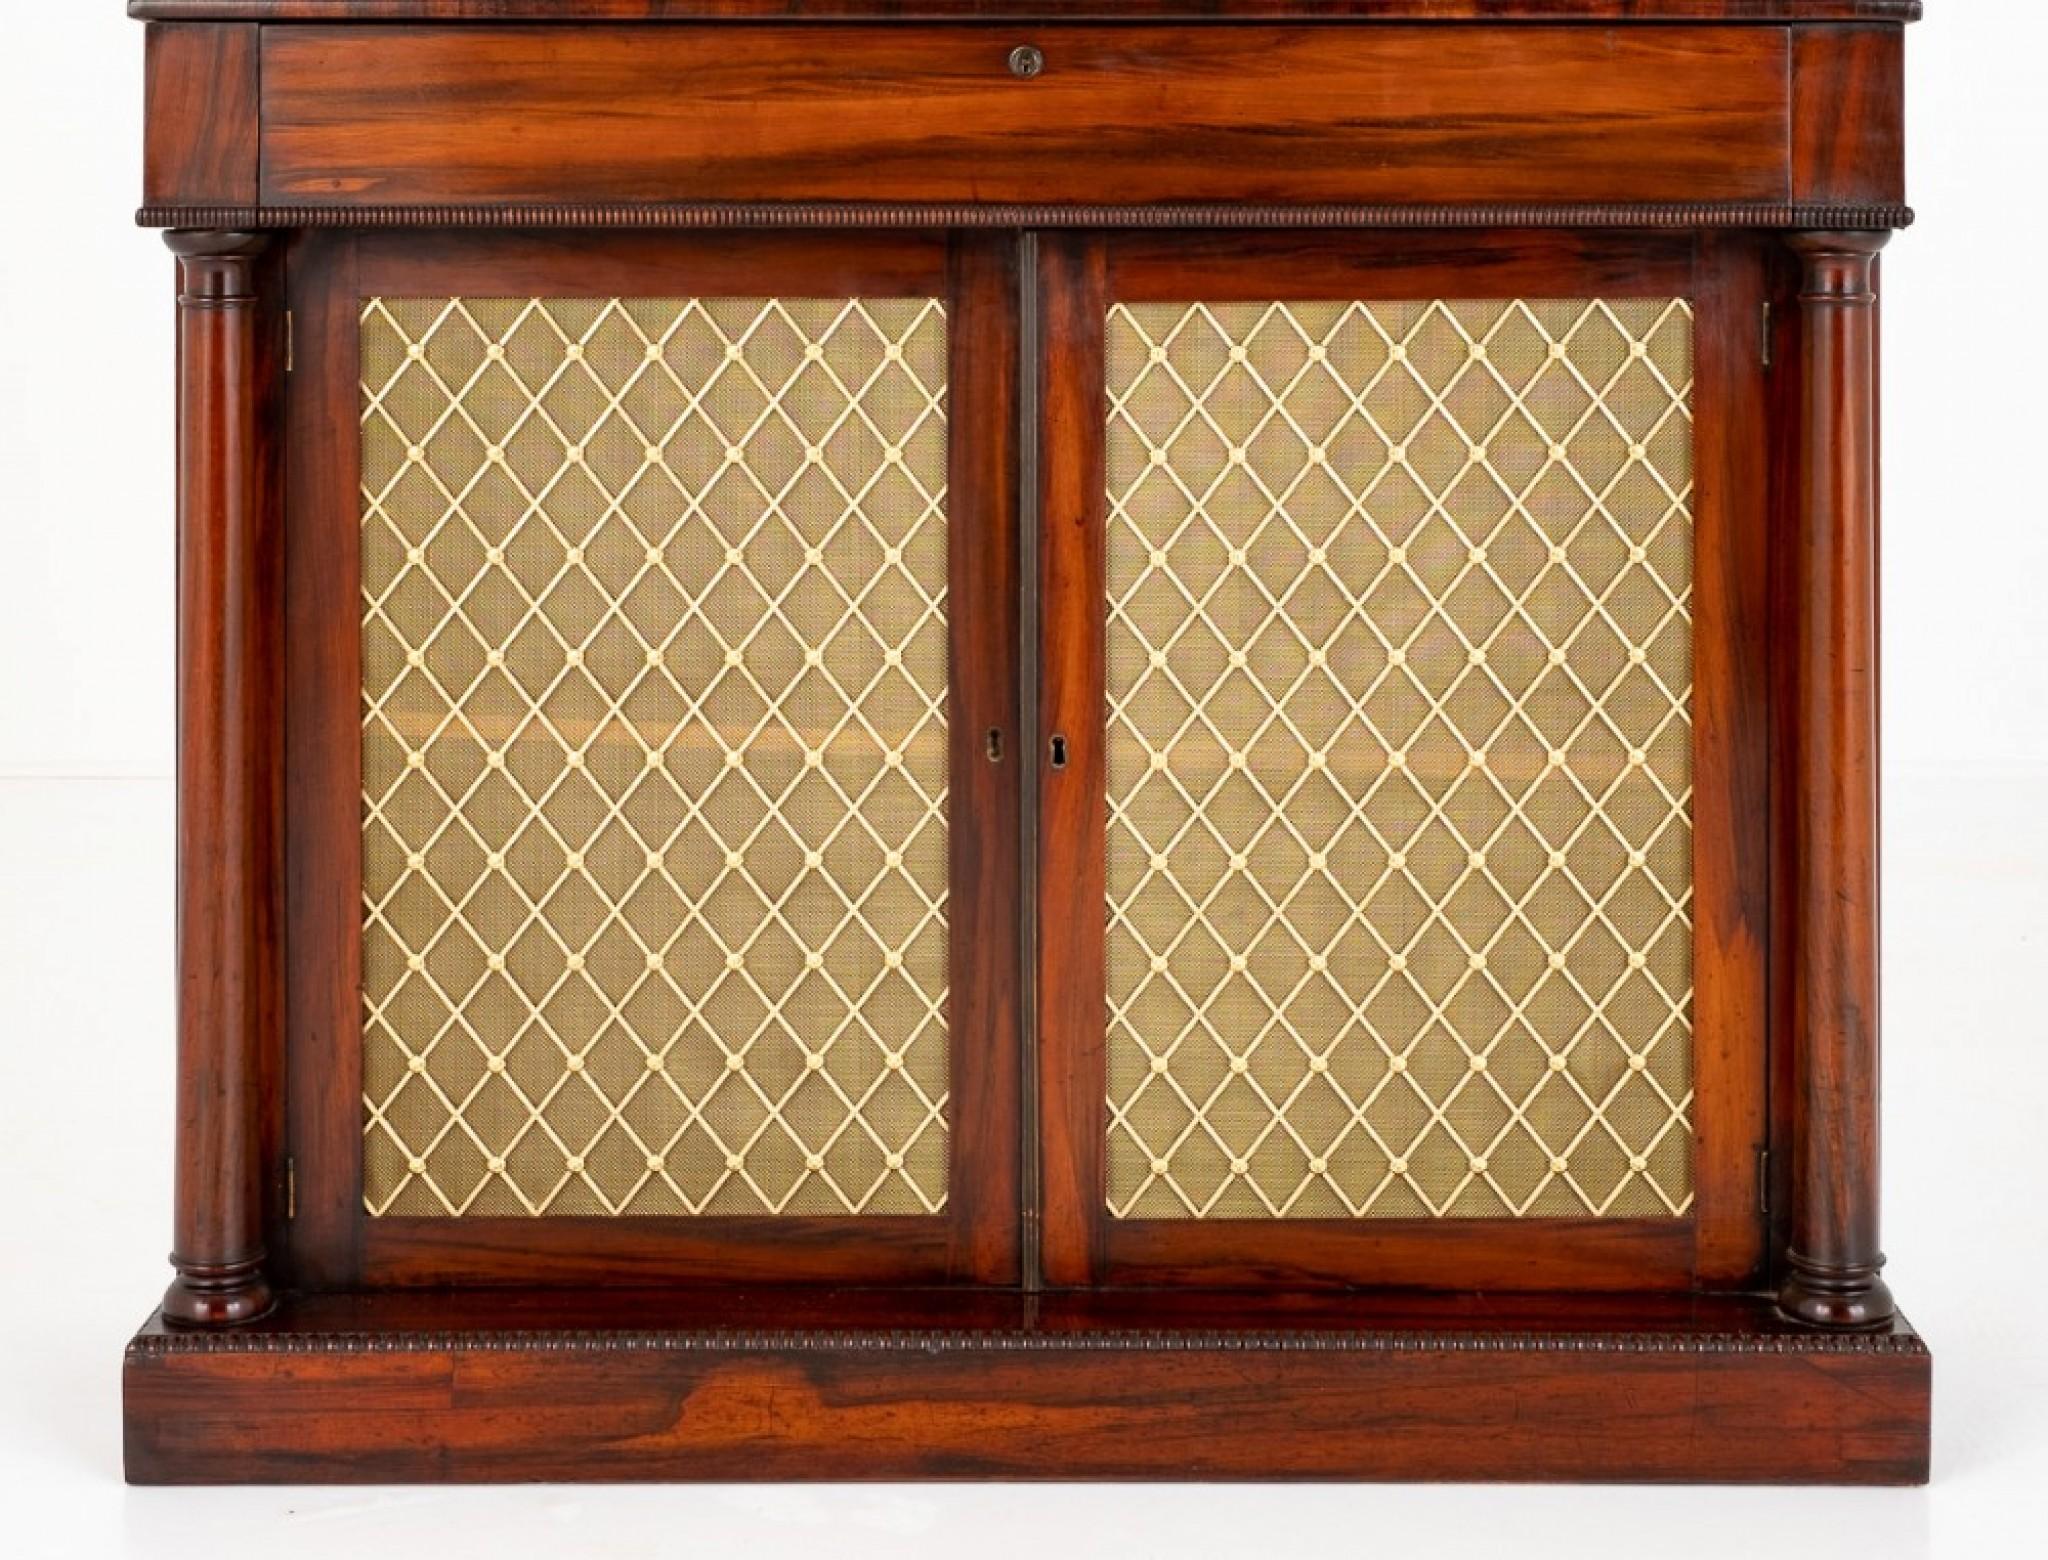 Regency Chiffonier Rosewood Antique Sideboard For Sale 1